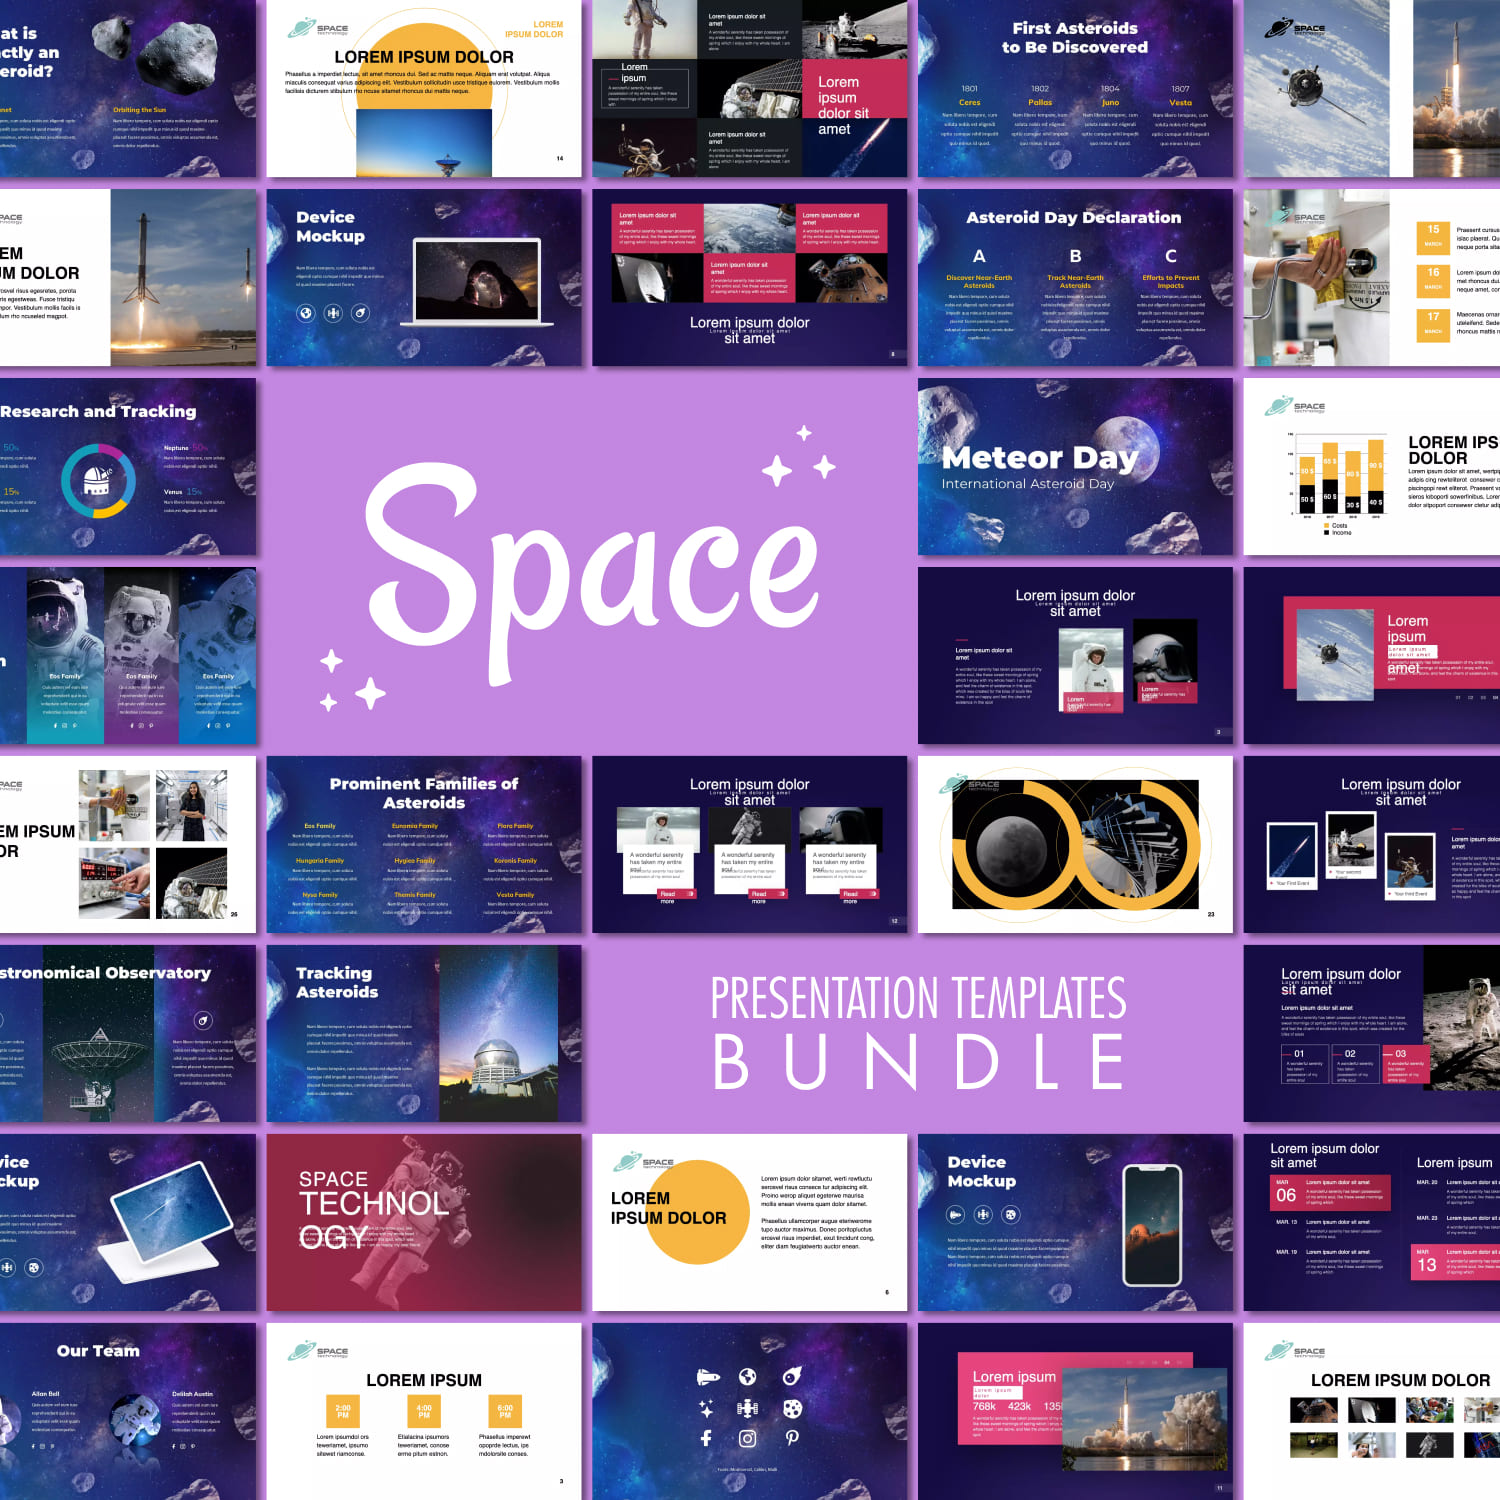 Space Presentation Templates Bundle - main image preview.